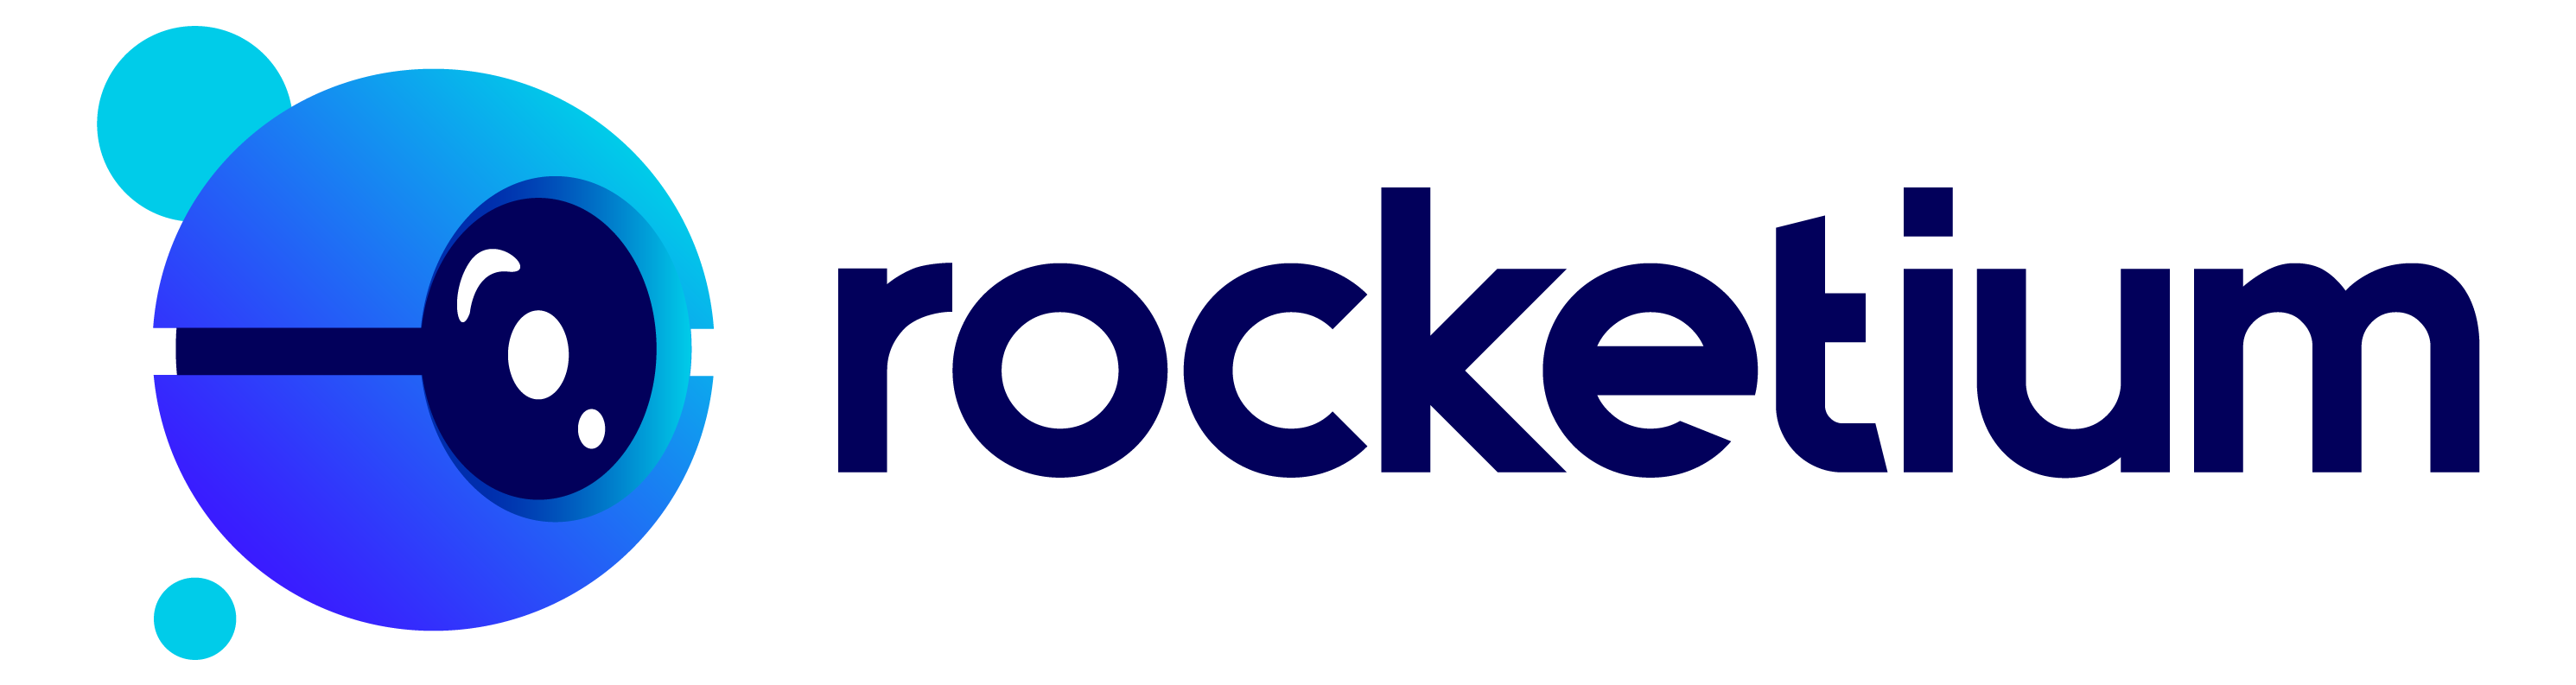 Rocketium-logo-high-res